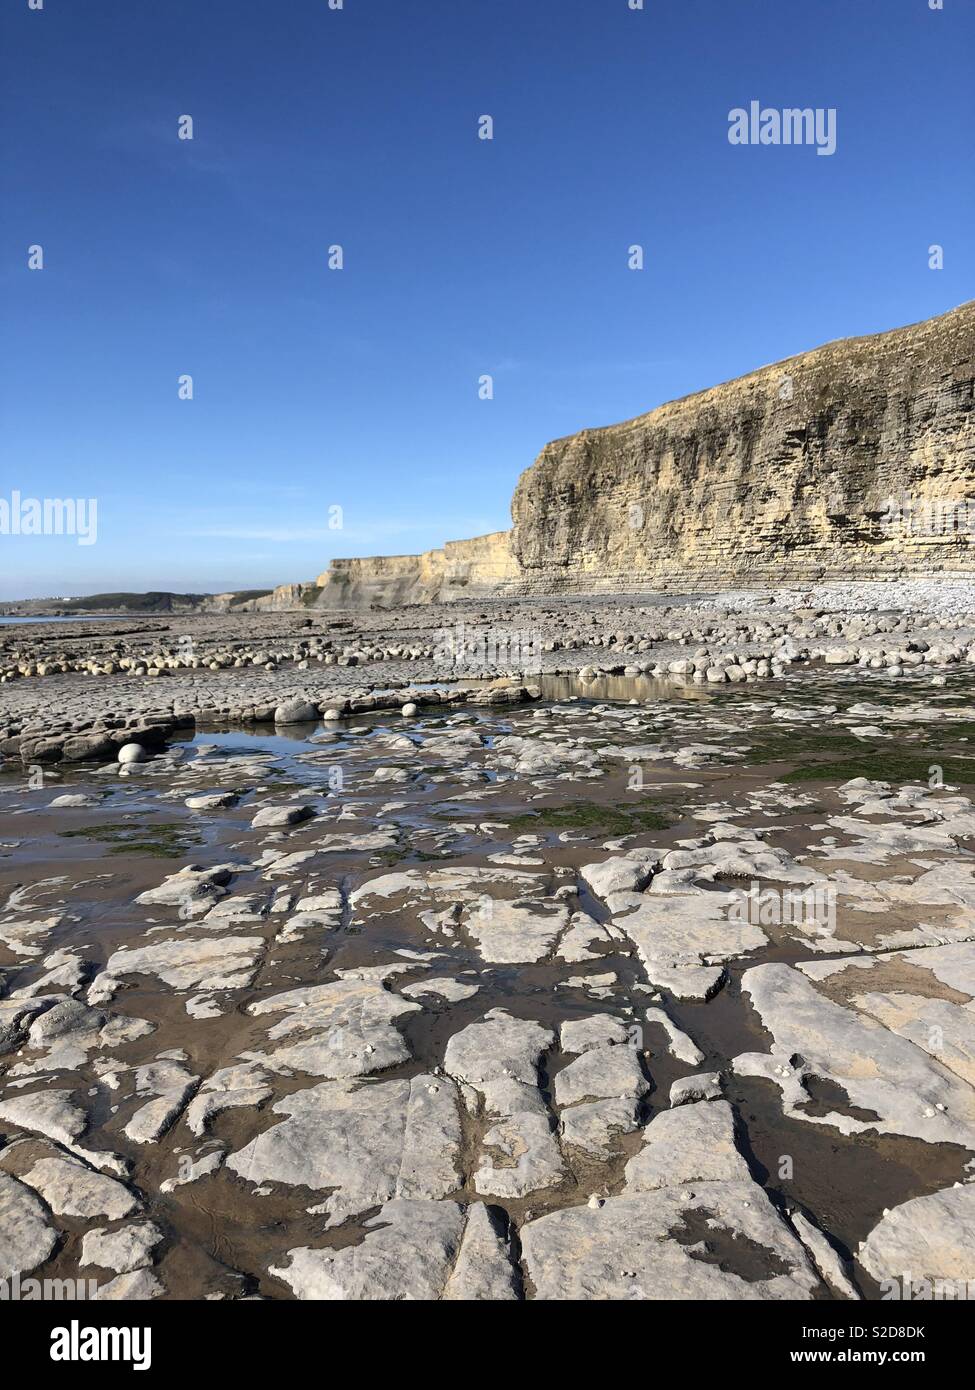 Rocks on a beach Stock Photo